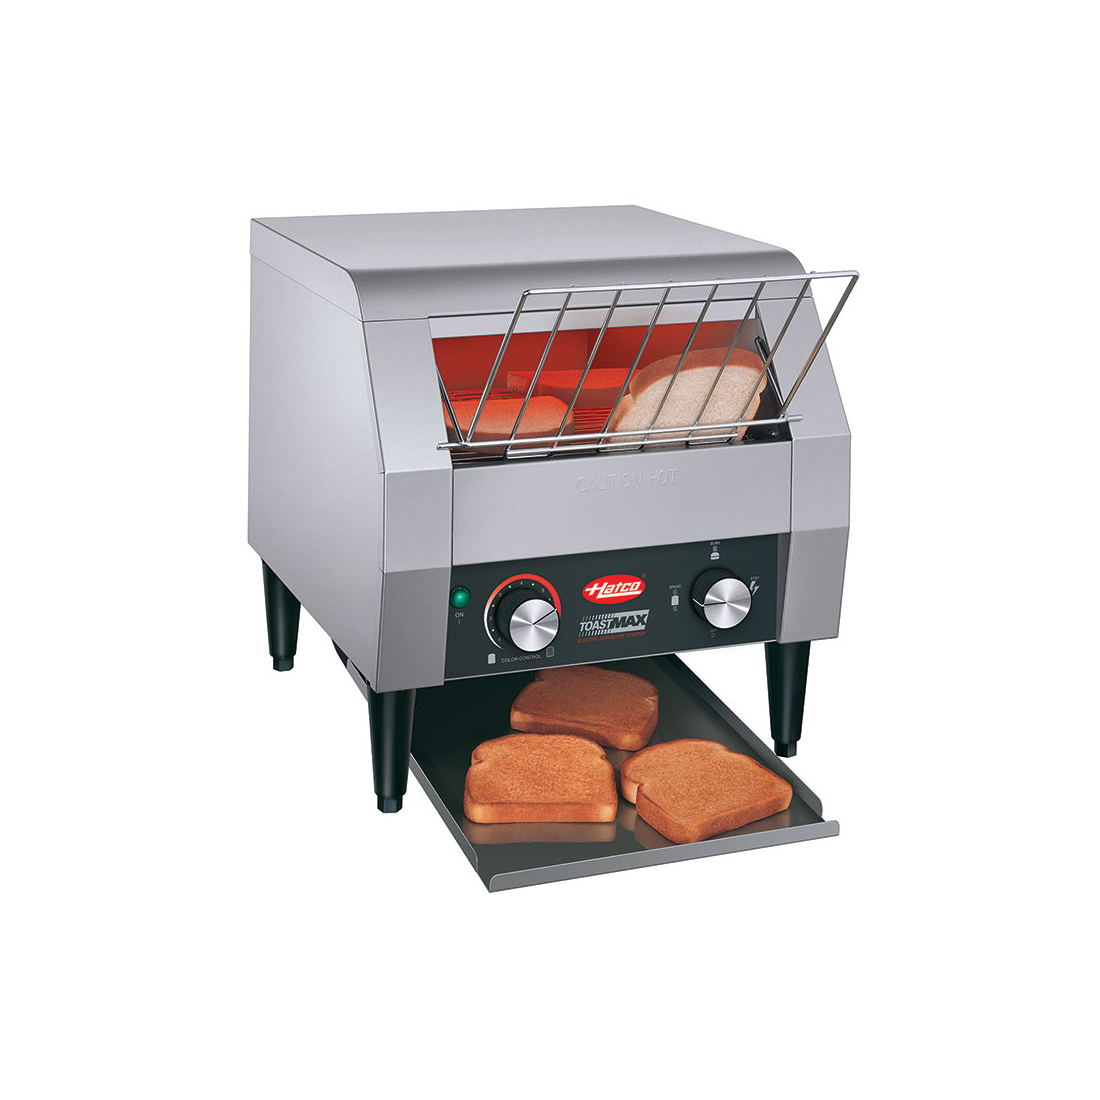 Hatco (TM-10H) Conveyor bread toaster